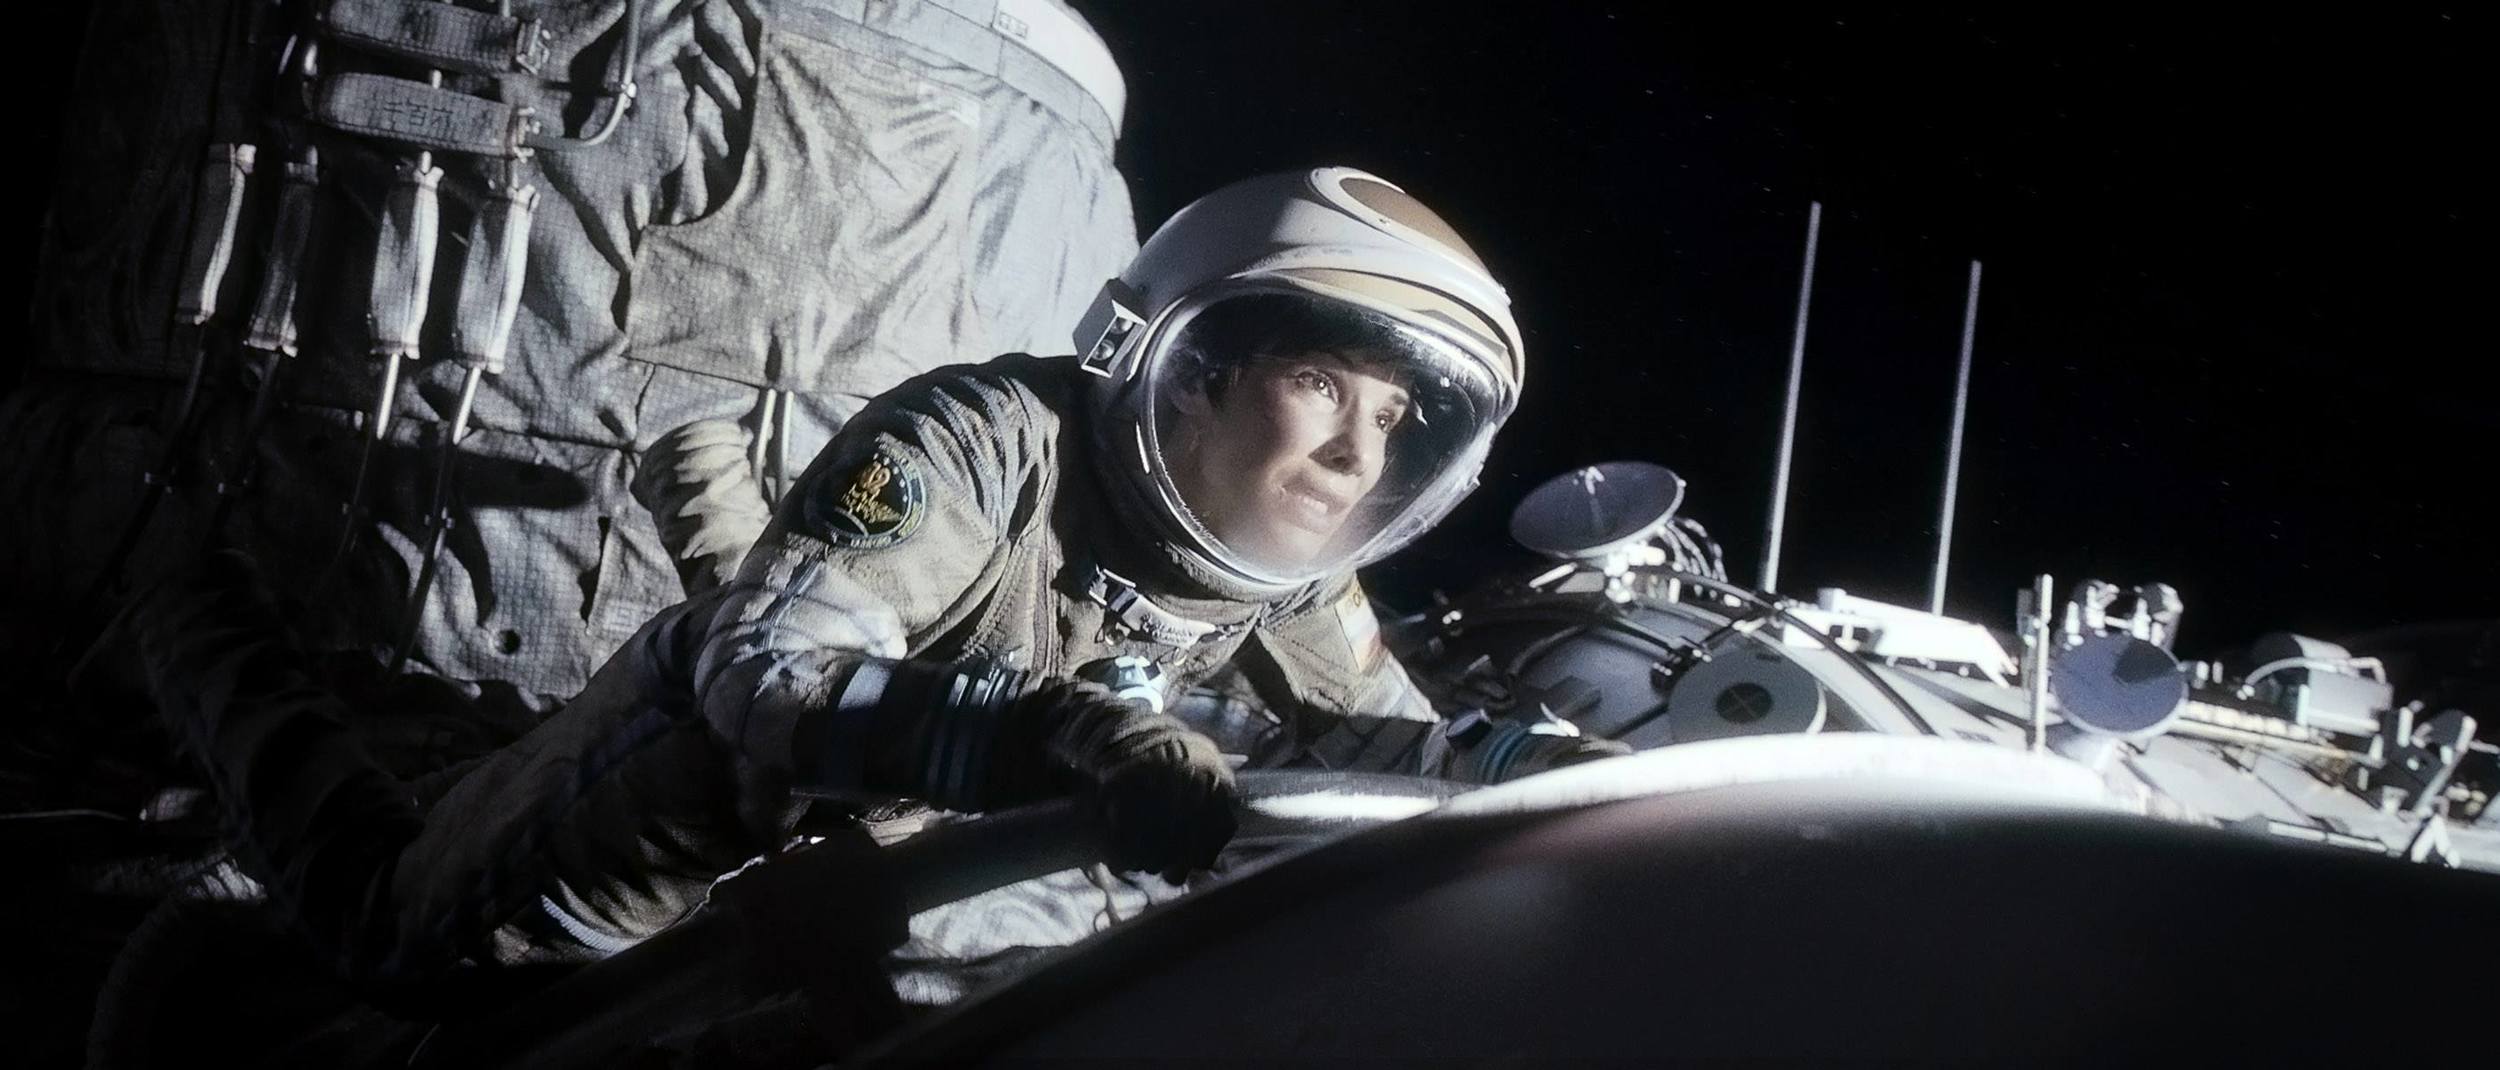 facebook.comSandra Bullock stars as astronaut Dr. Ryan Stone in the science-fiction thriller “Gravity.”